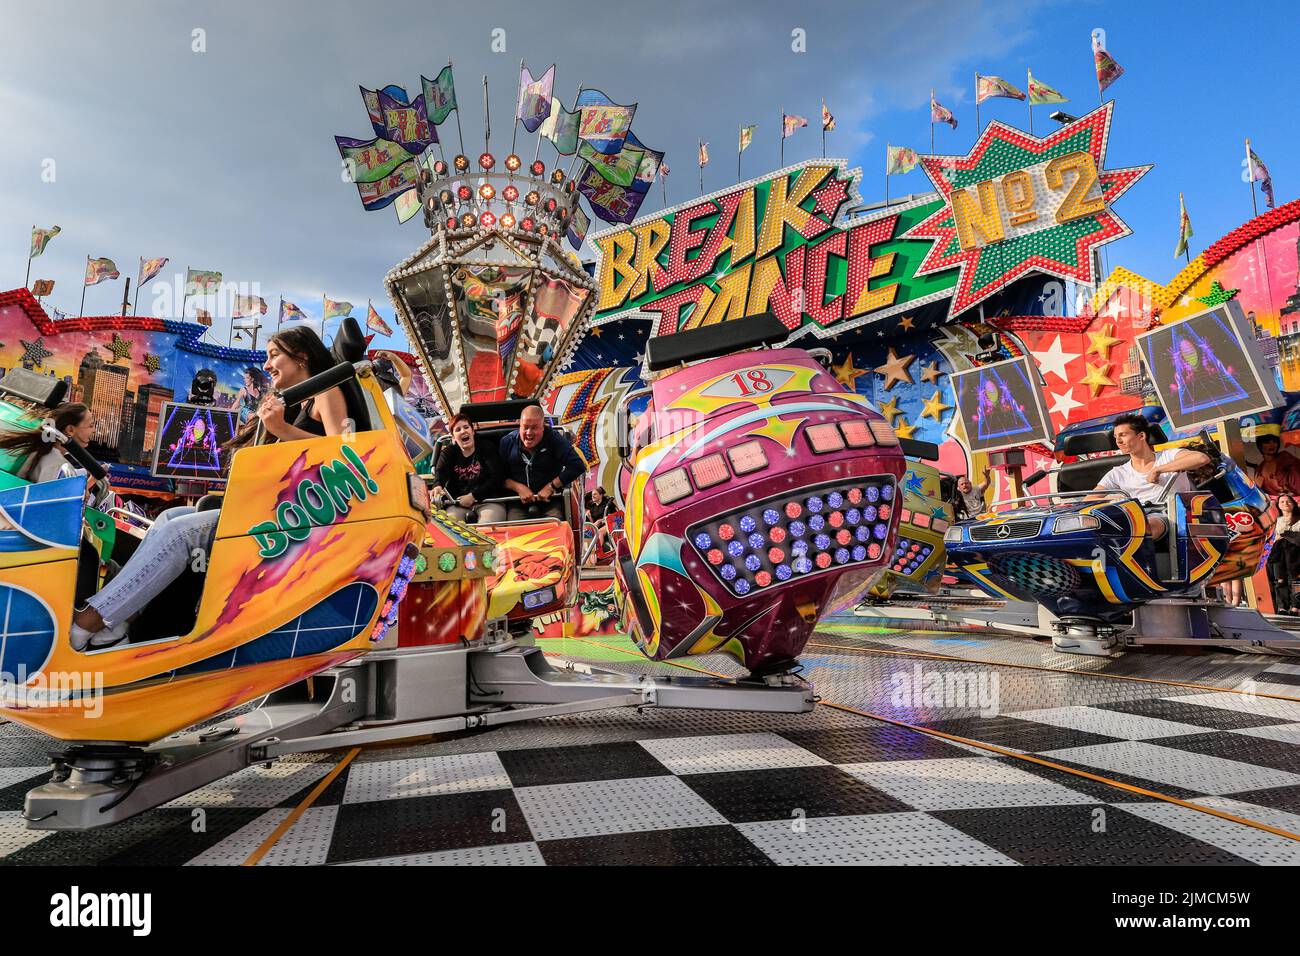 Break dance ride fun fair hi-res stock photography and images - Alamy